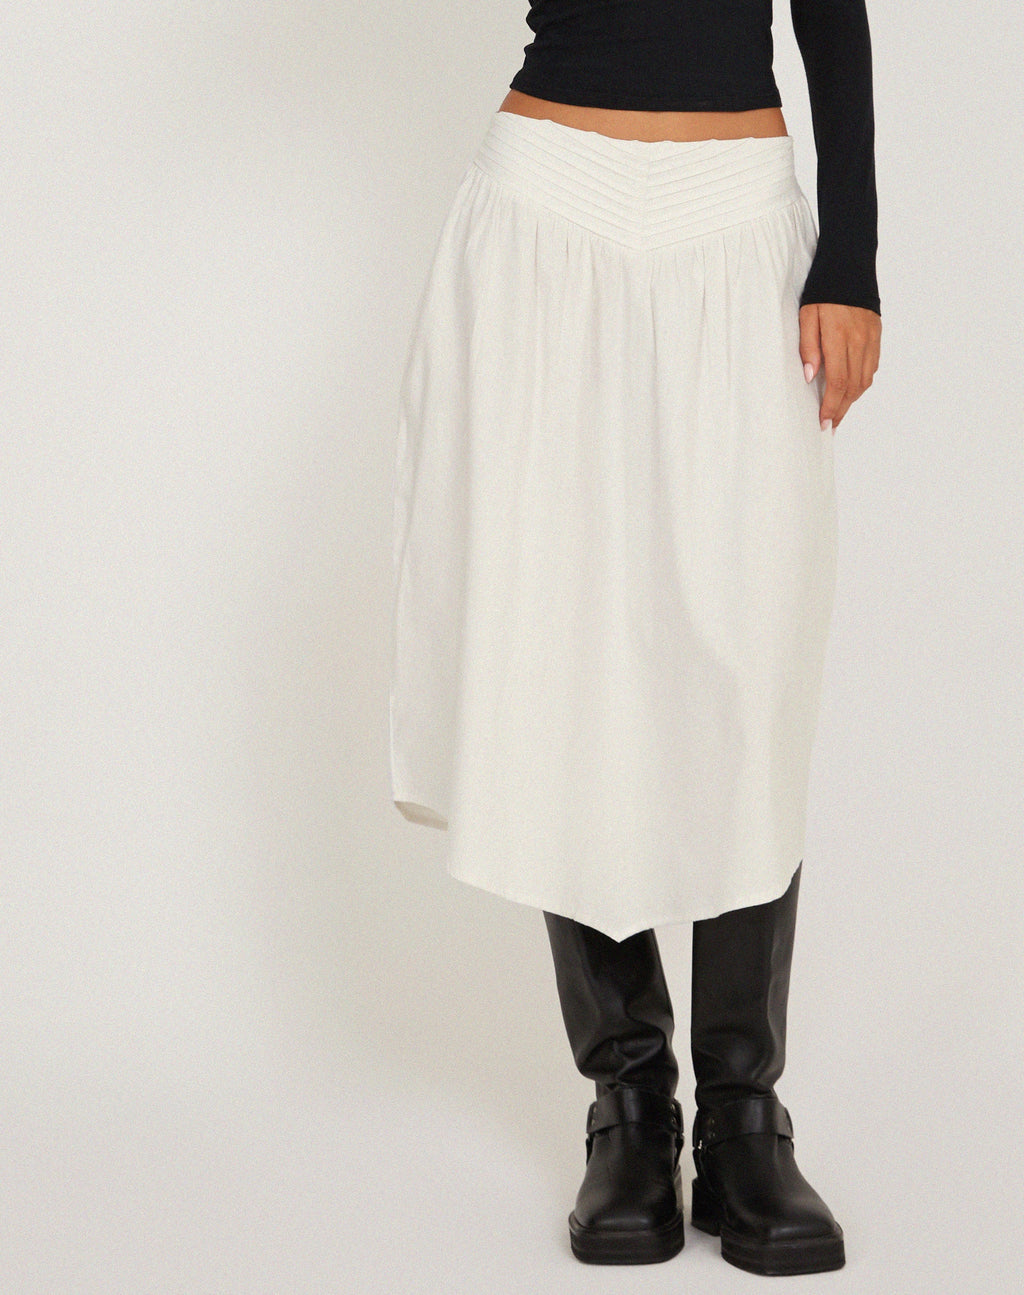 India Midi Skirt in White